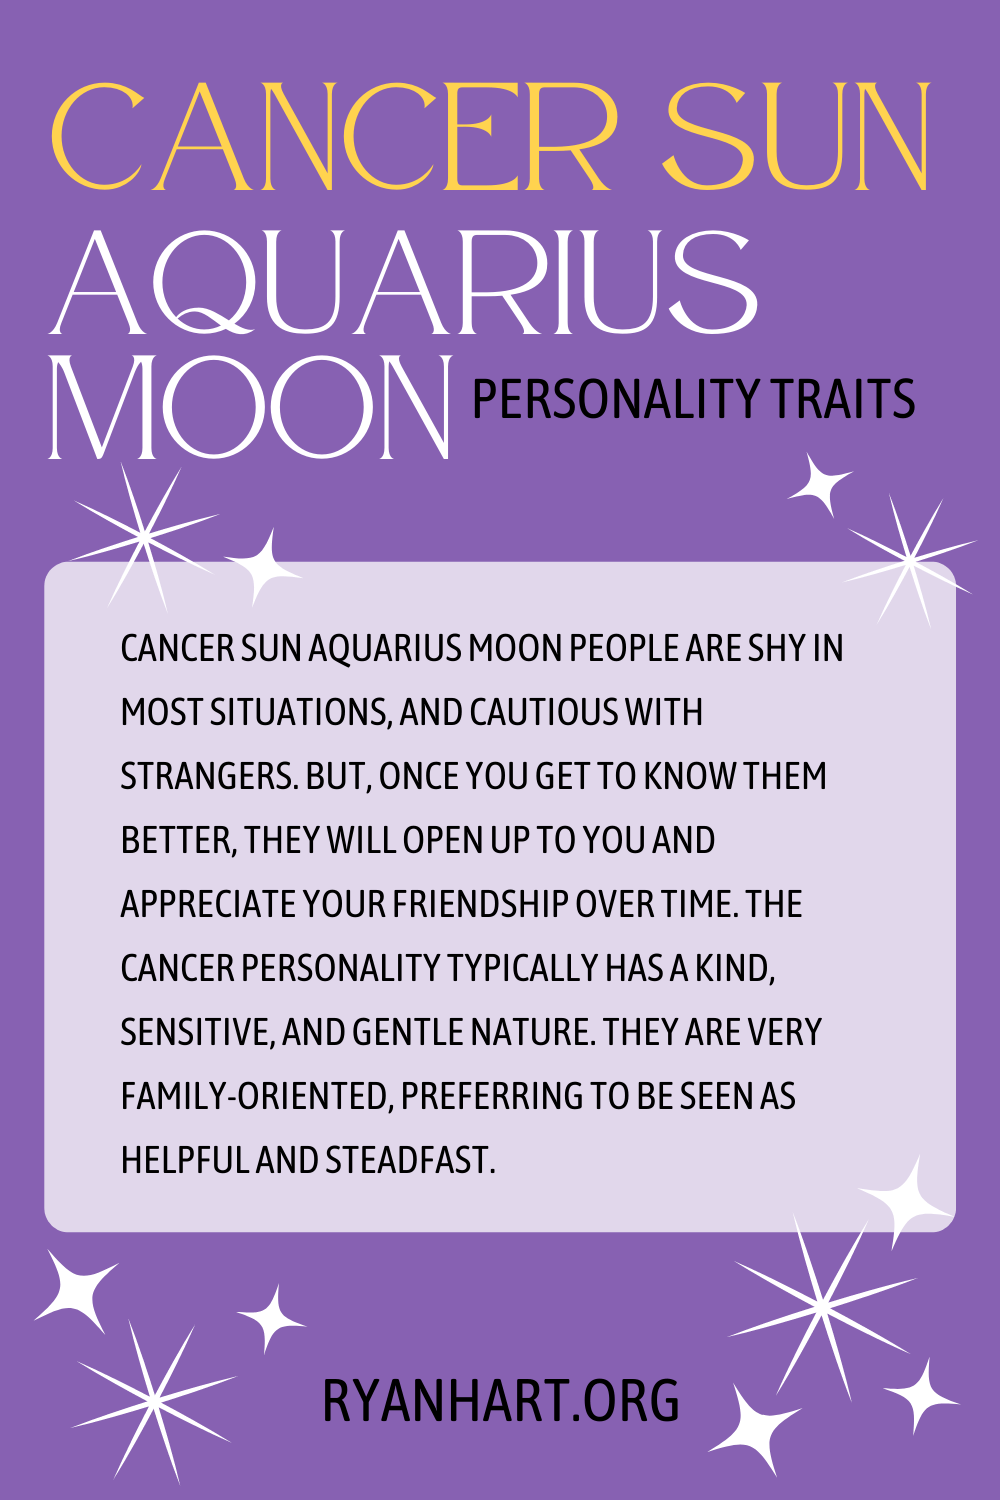 Cancer Sun Aquarius Moon Description